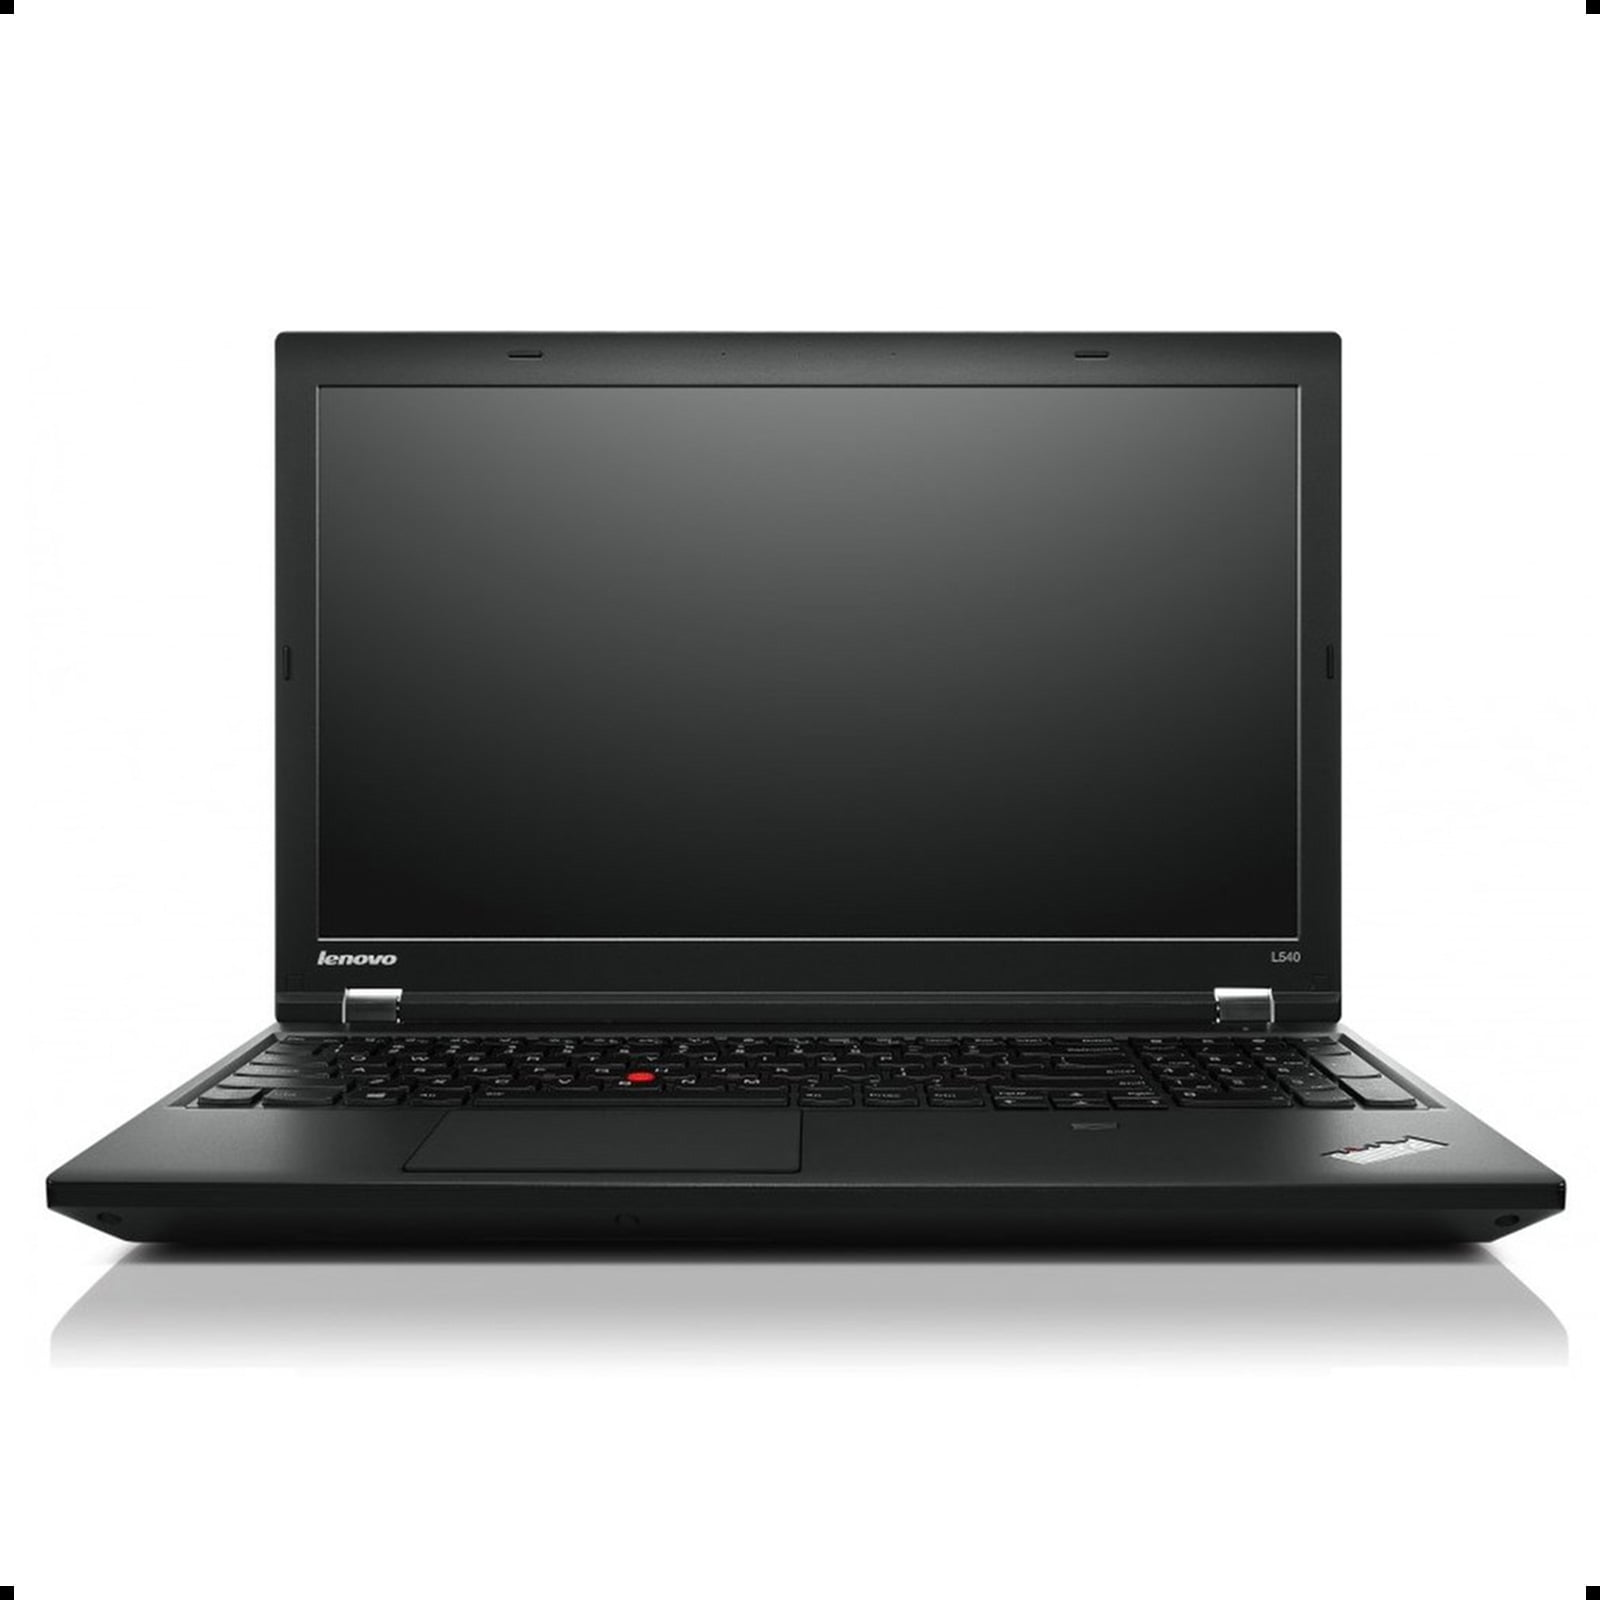 Lenovo ThinkPad L540 15.6 Business Laptop, Intel Core i5-4300M 2.6GHZ, 8G DDR3L, 128G SSD, VGA, USB 3.0, DVDRW, Windows 10 Pro 64 Used Grade A - Walmart.com